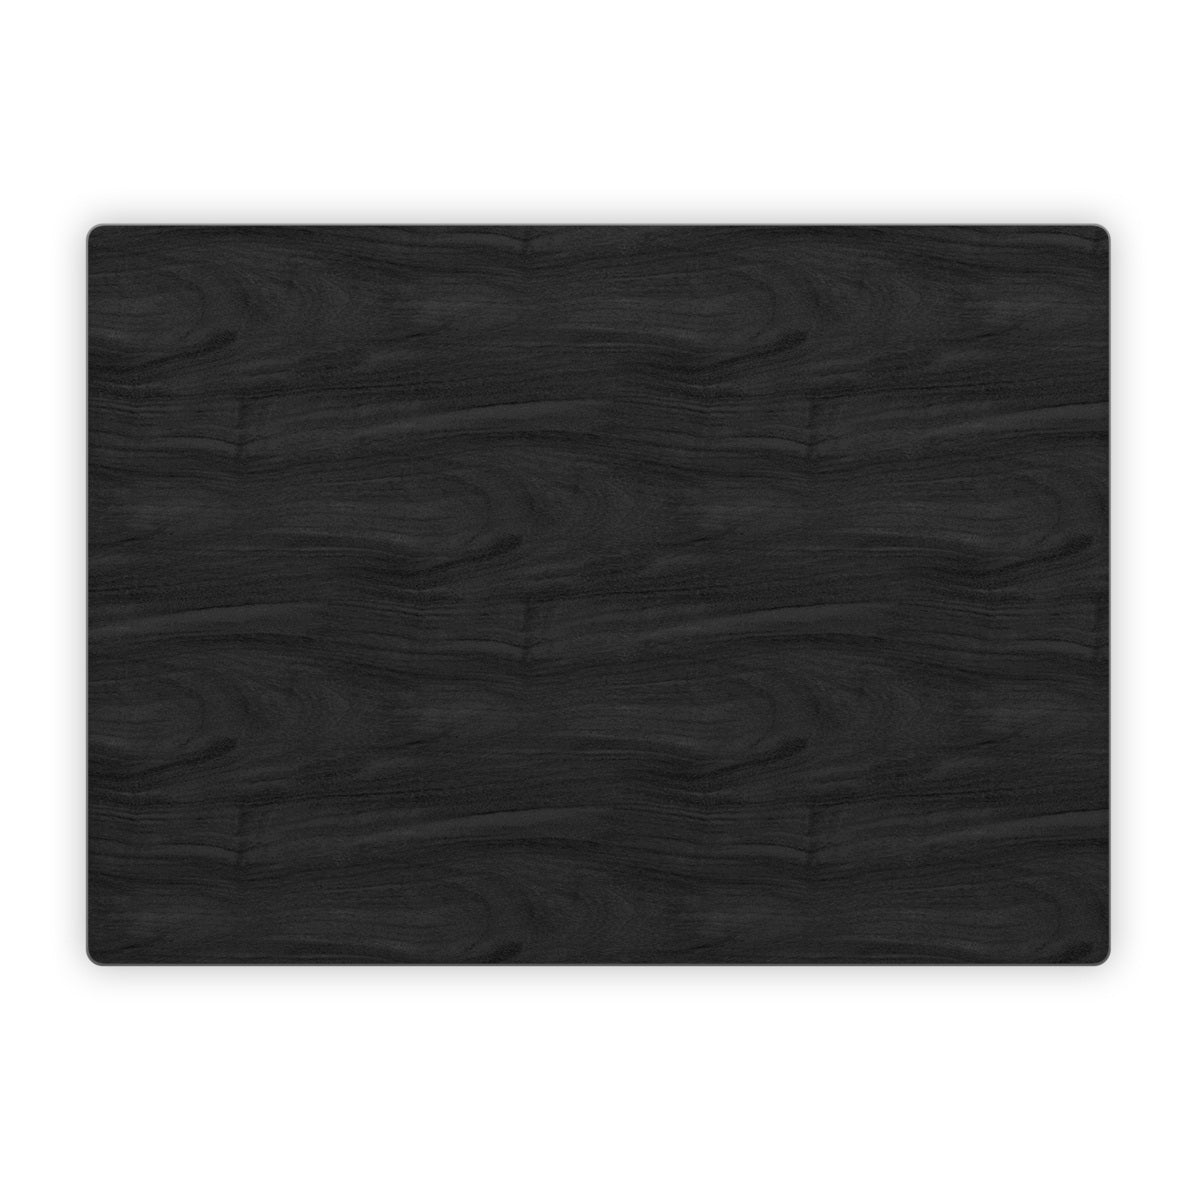 Black Woodgrain - Microsoft Surface Laptop Skin